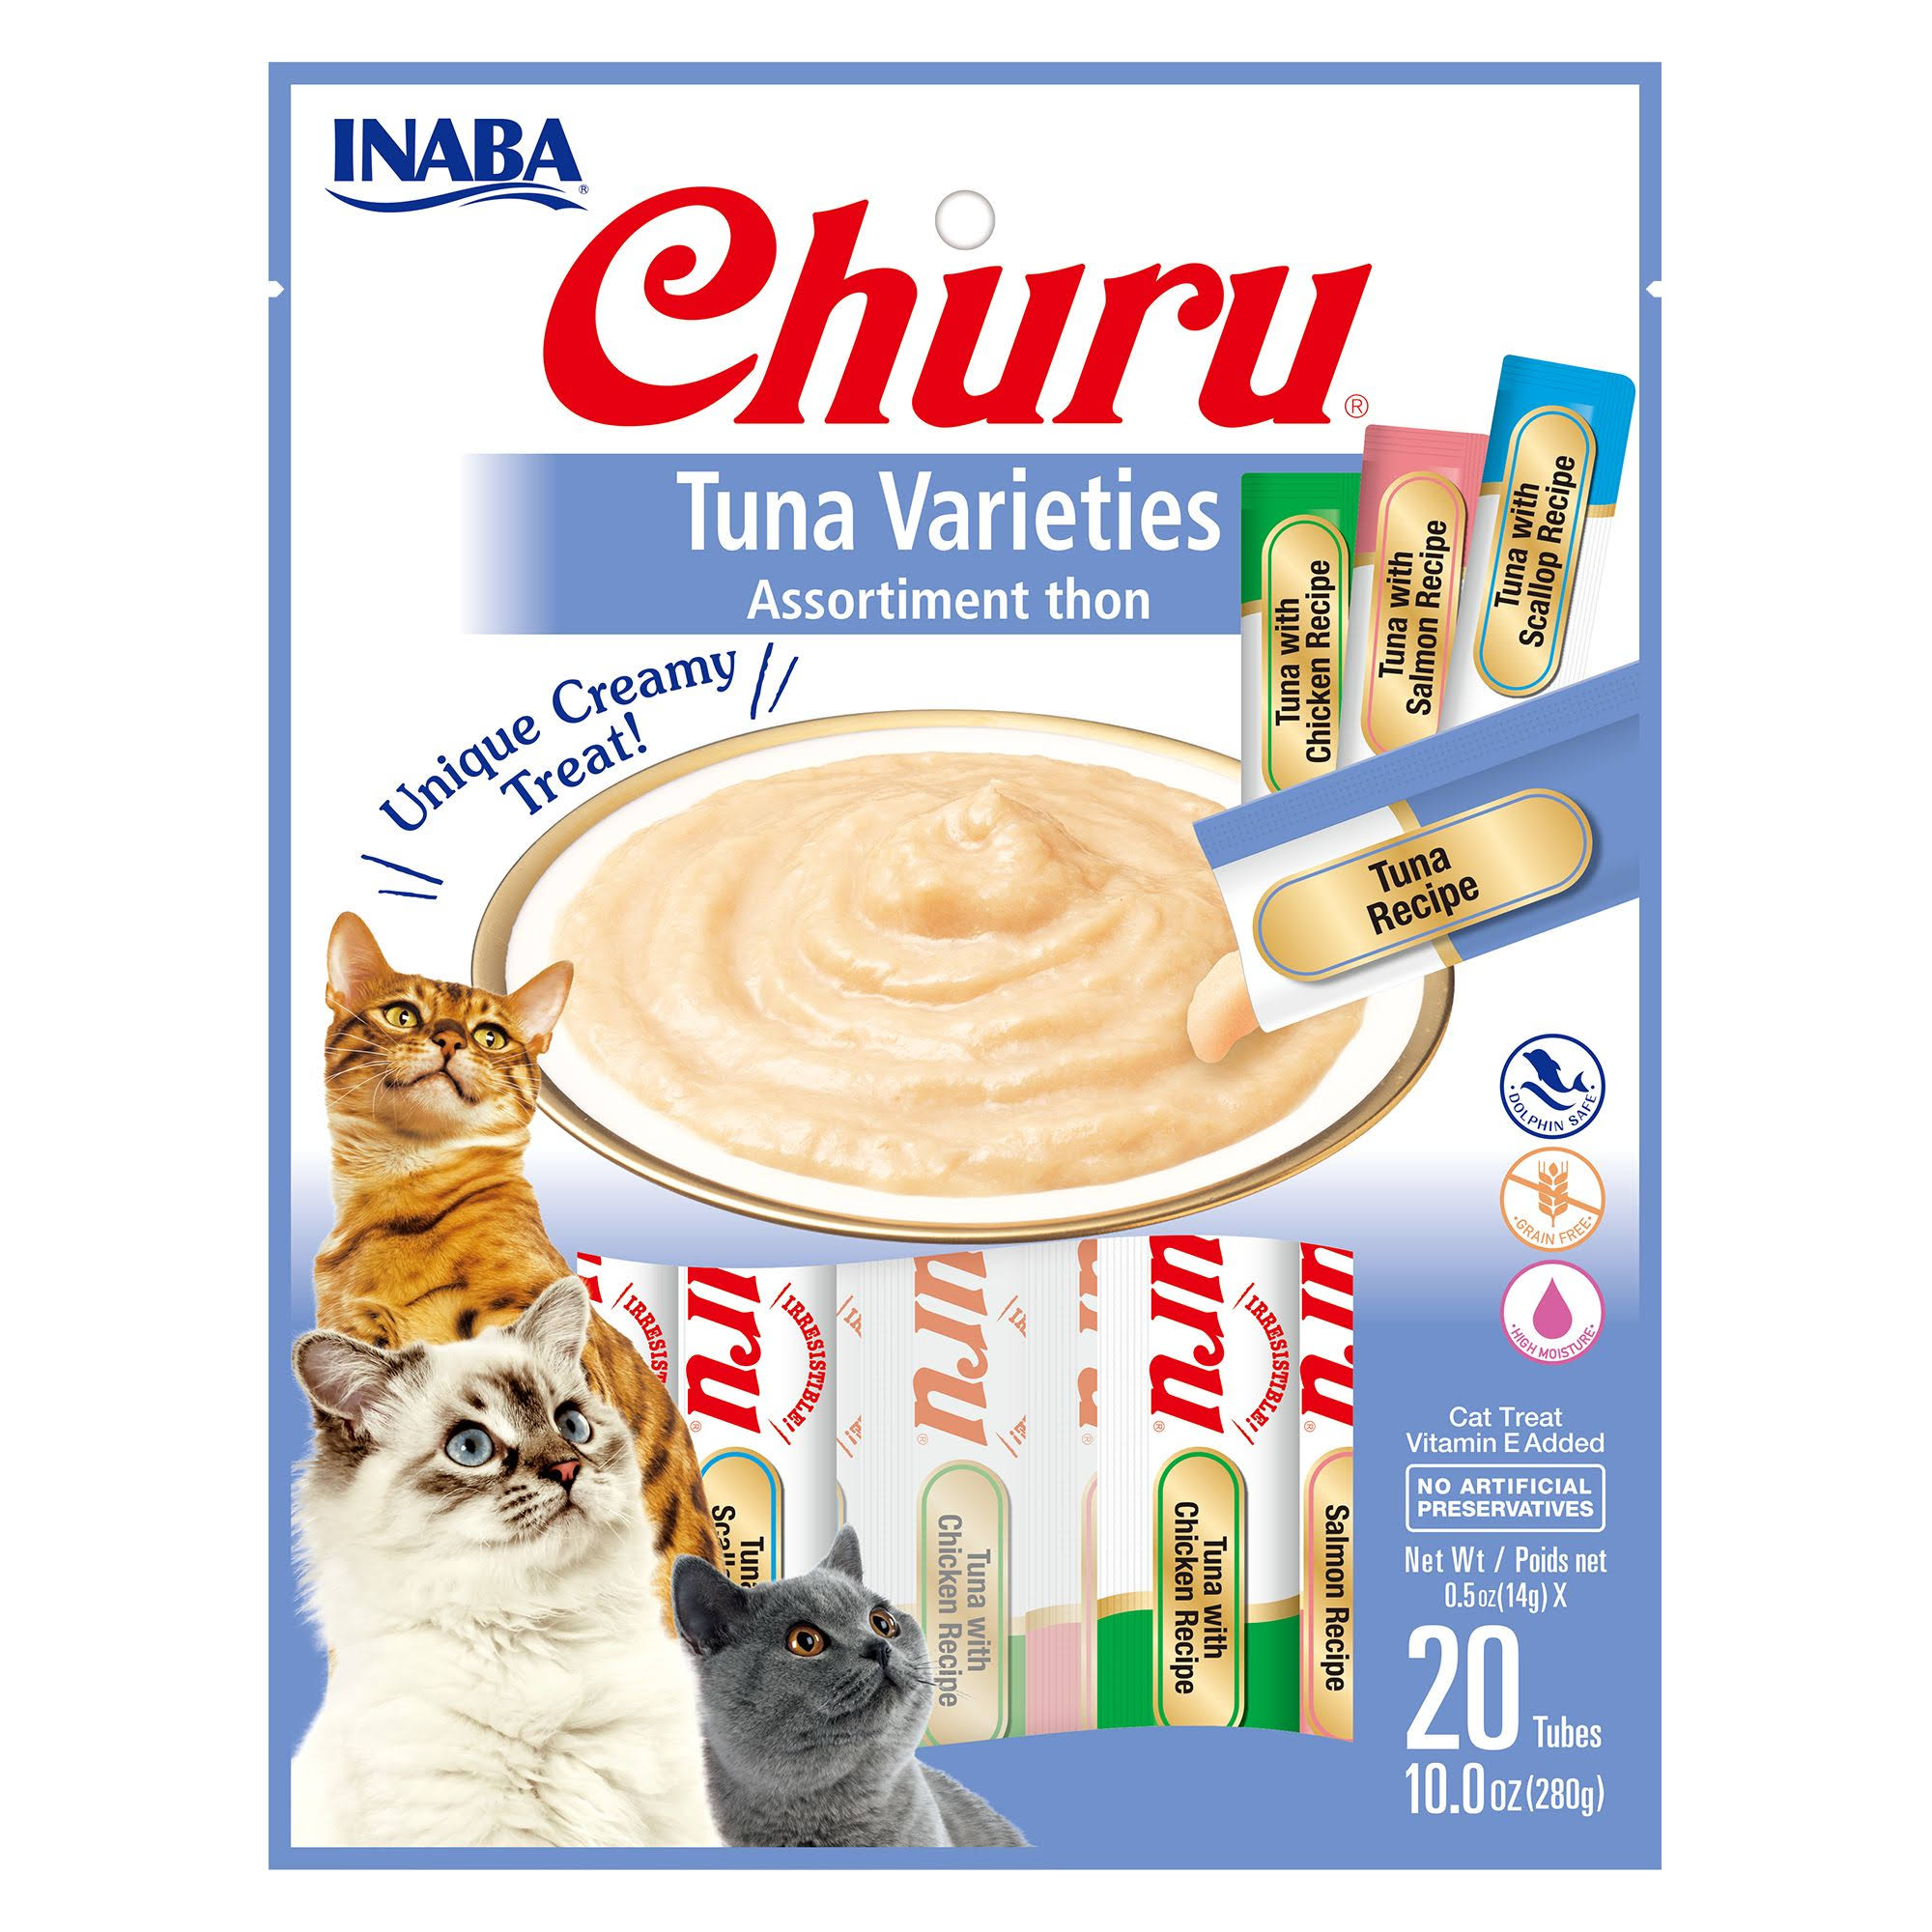 Inaba Churu Creamy Puree Cat Treats - Tuna Varieties, 20 pack